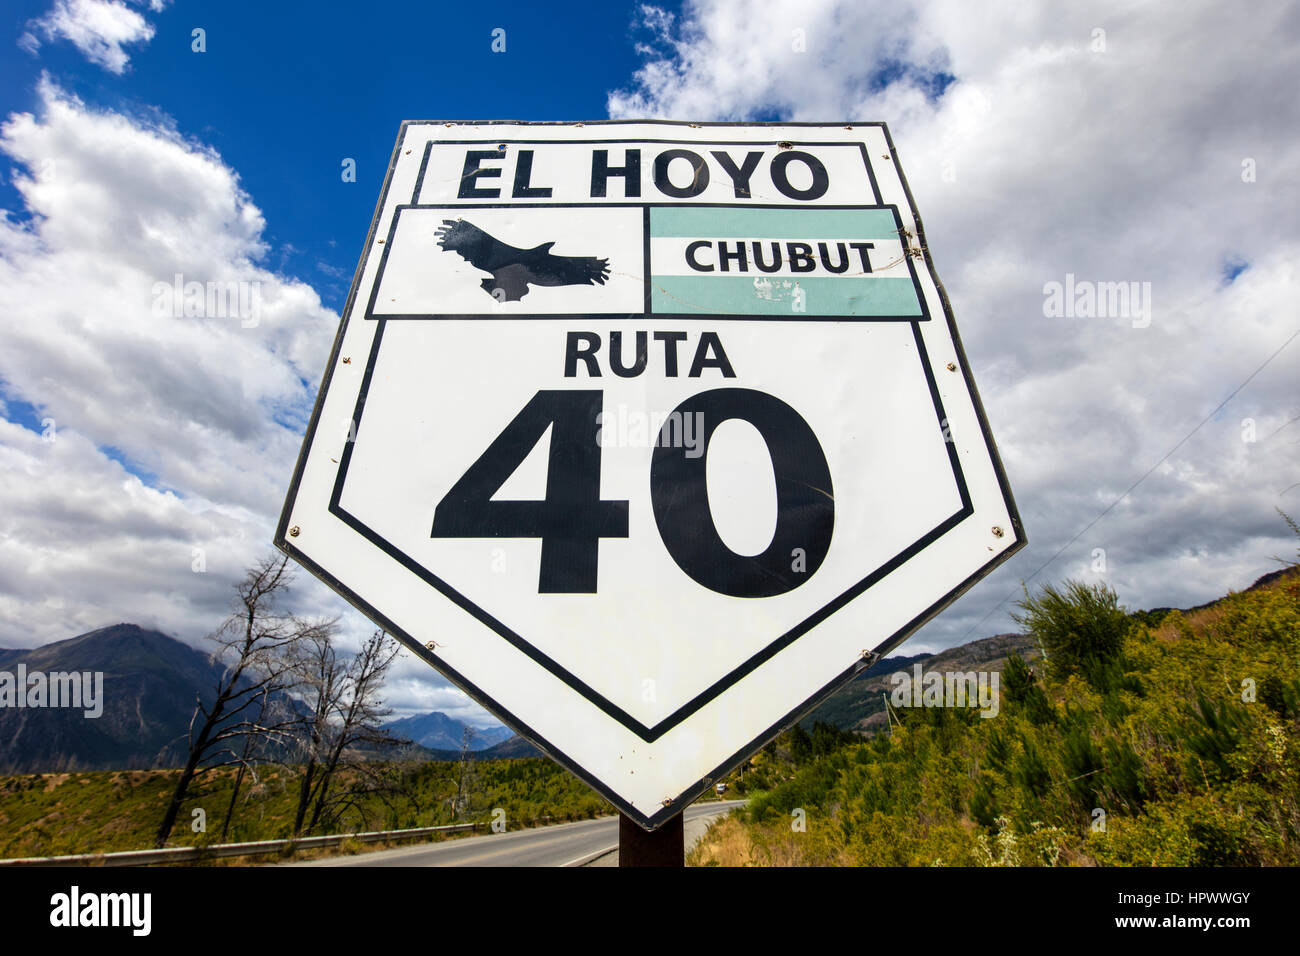 Ruta 40 El Hoyo road sign. Chubut, Patagonia, Argentina. Stock Photo